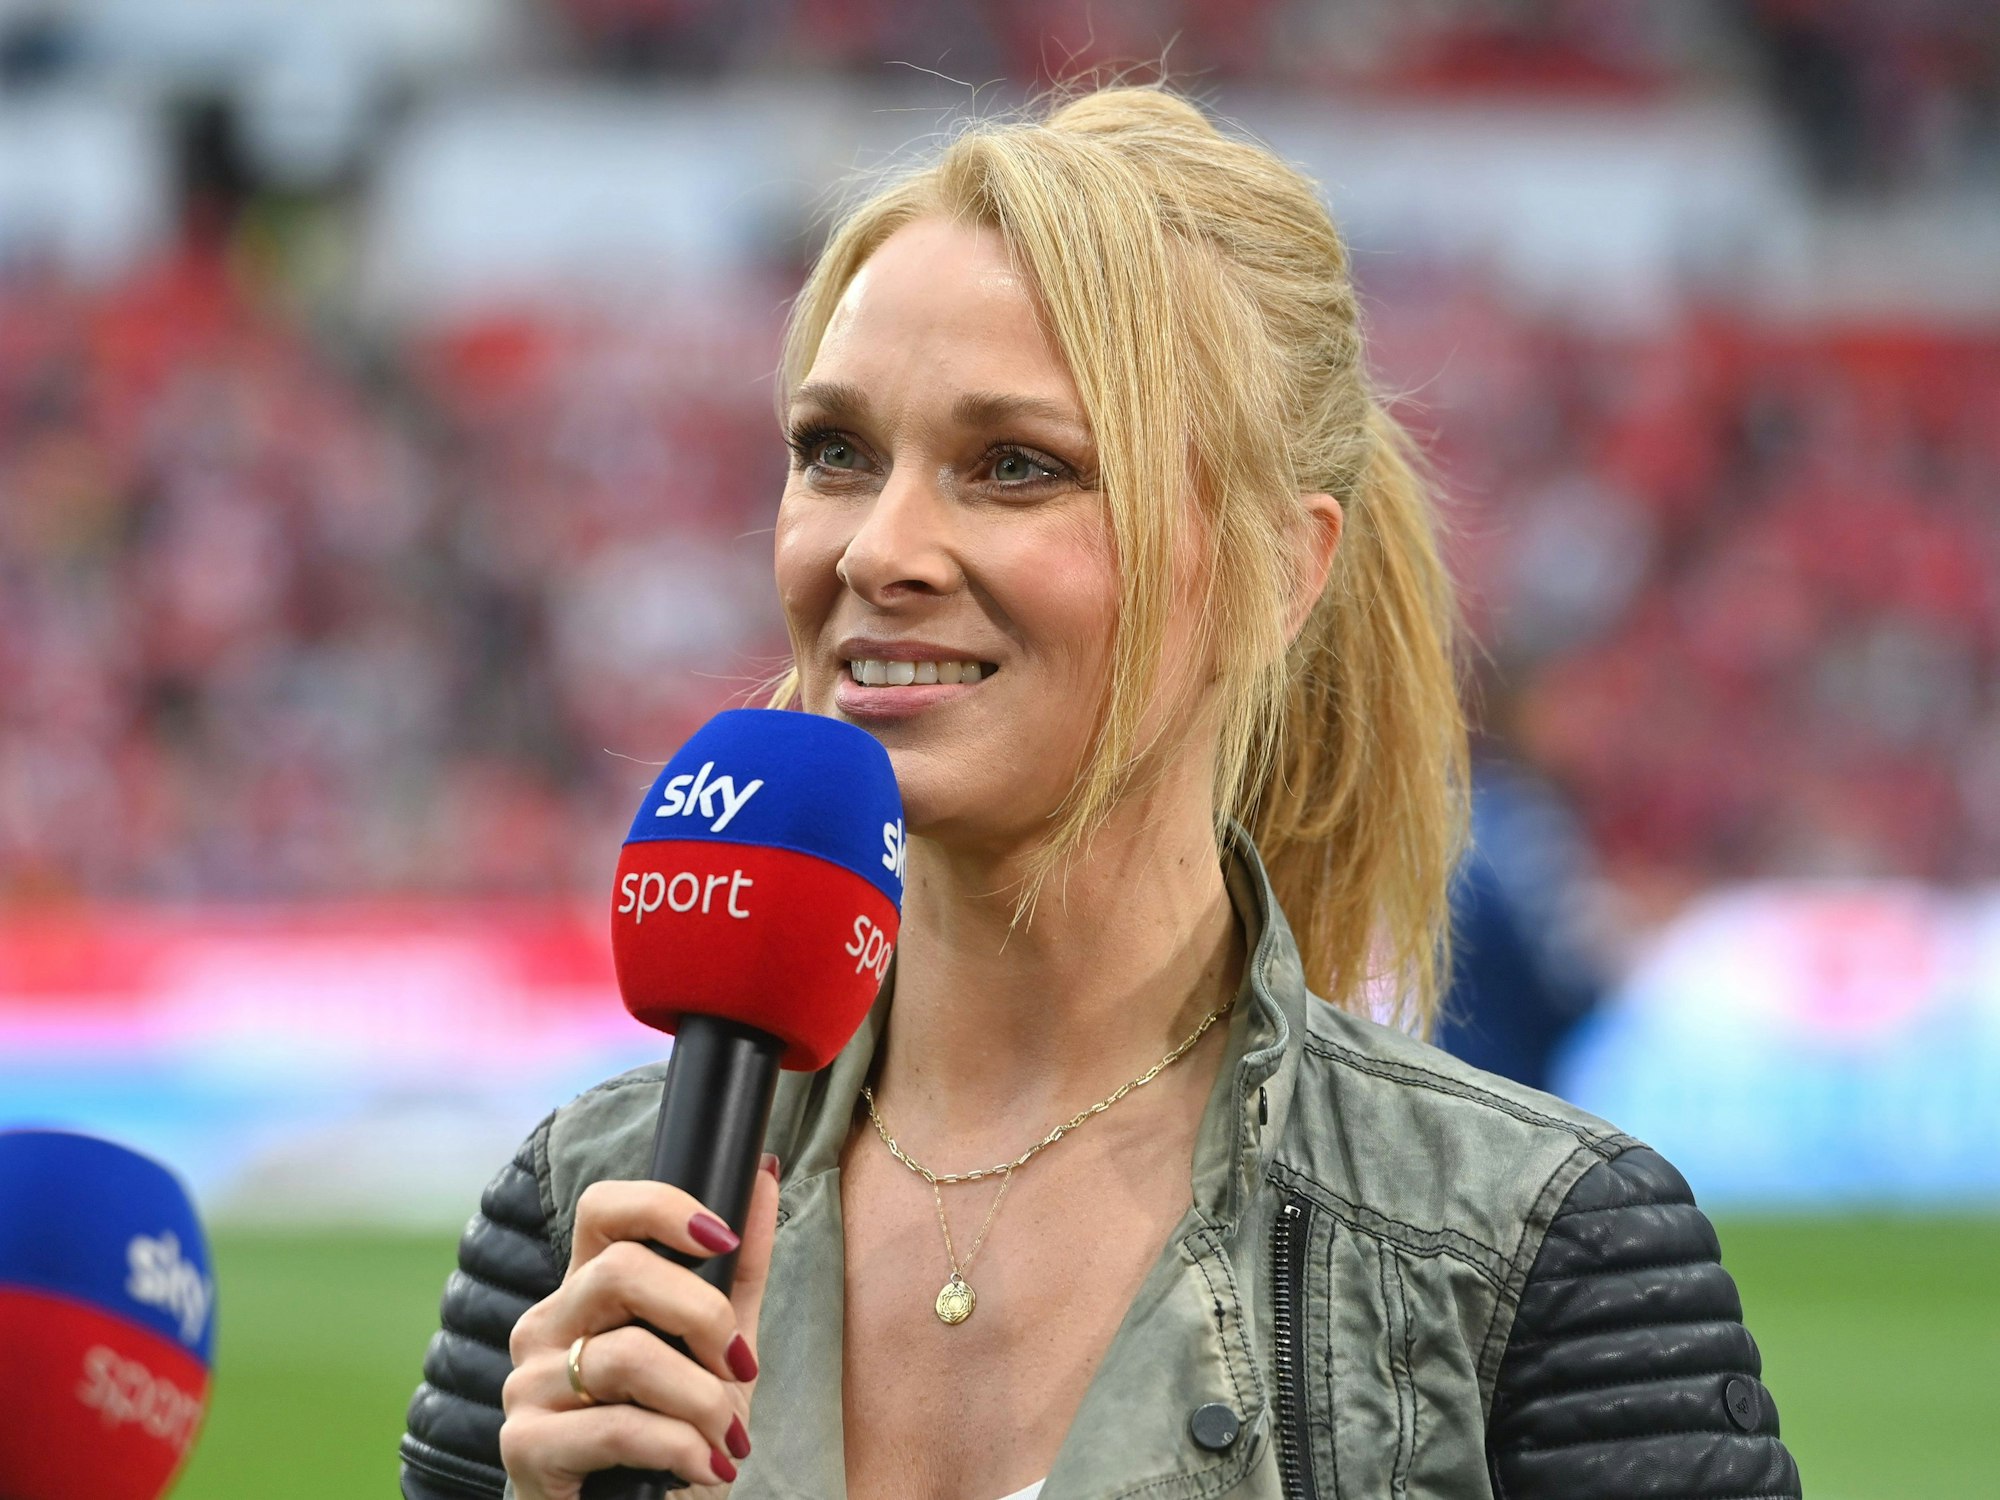 Sky-Moderatorin Britta Hofmann hält ein Mikrofon in der Hand.